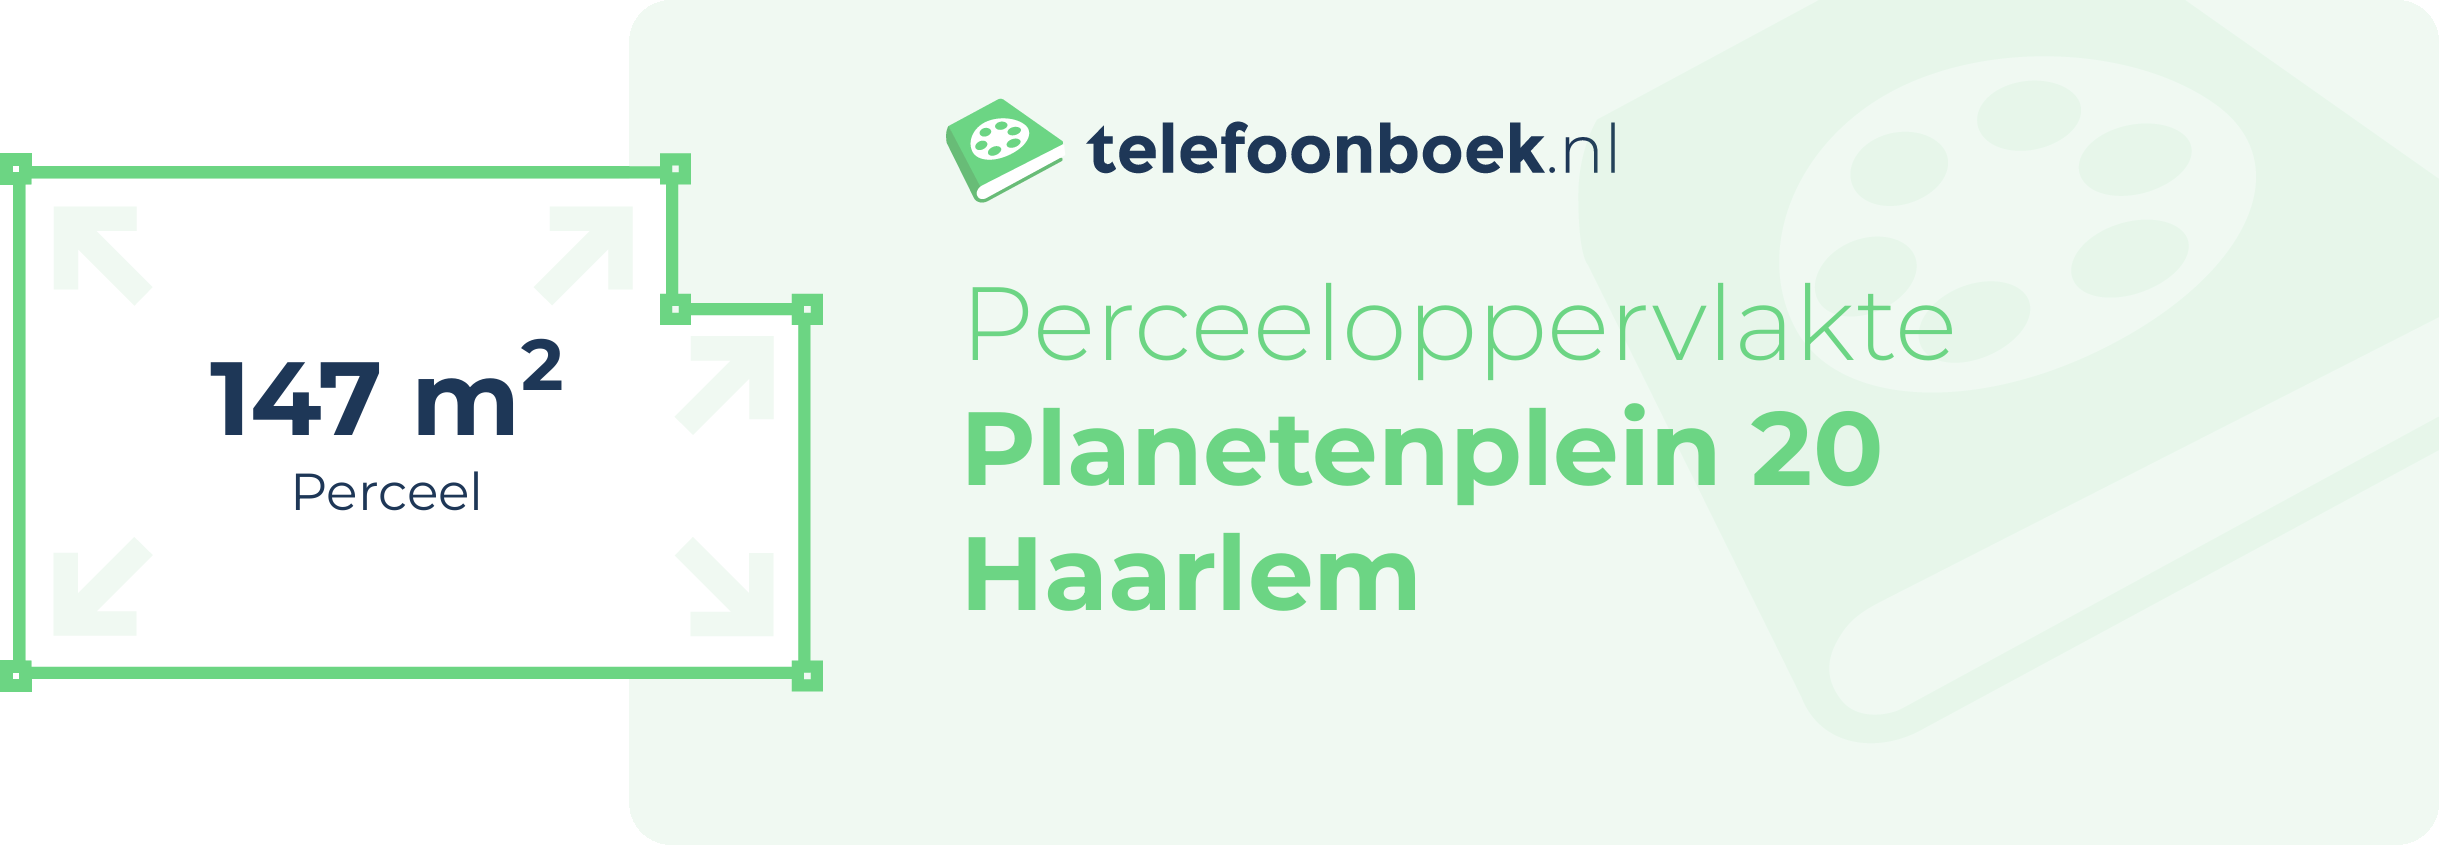 Perceeloppervlakte Planetenplein 20 Haarlem